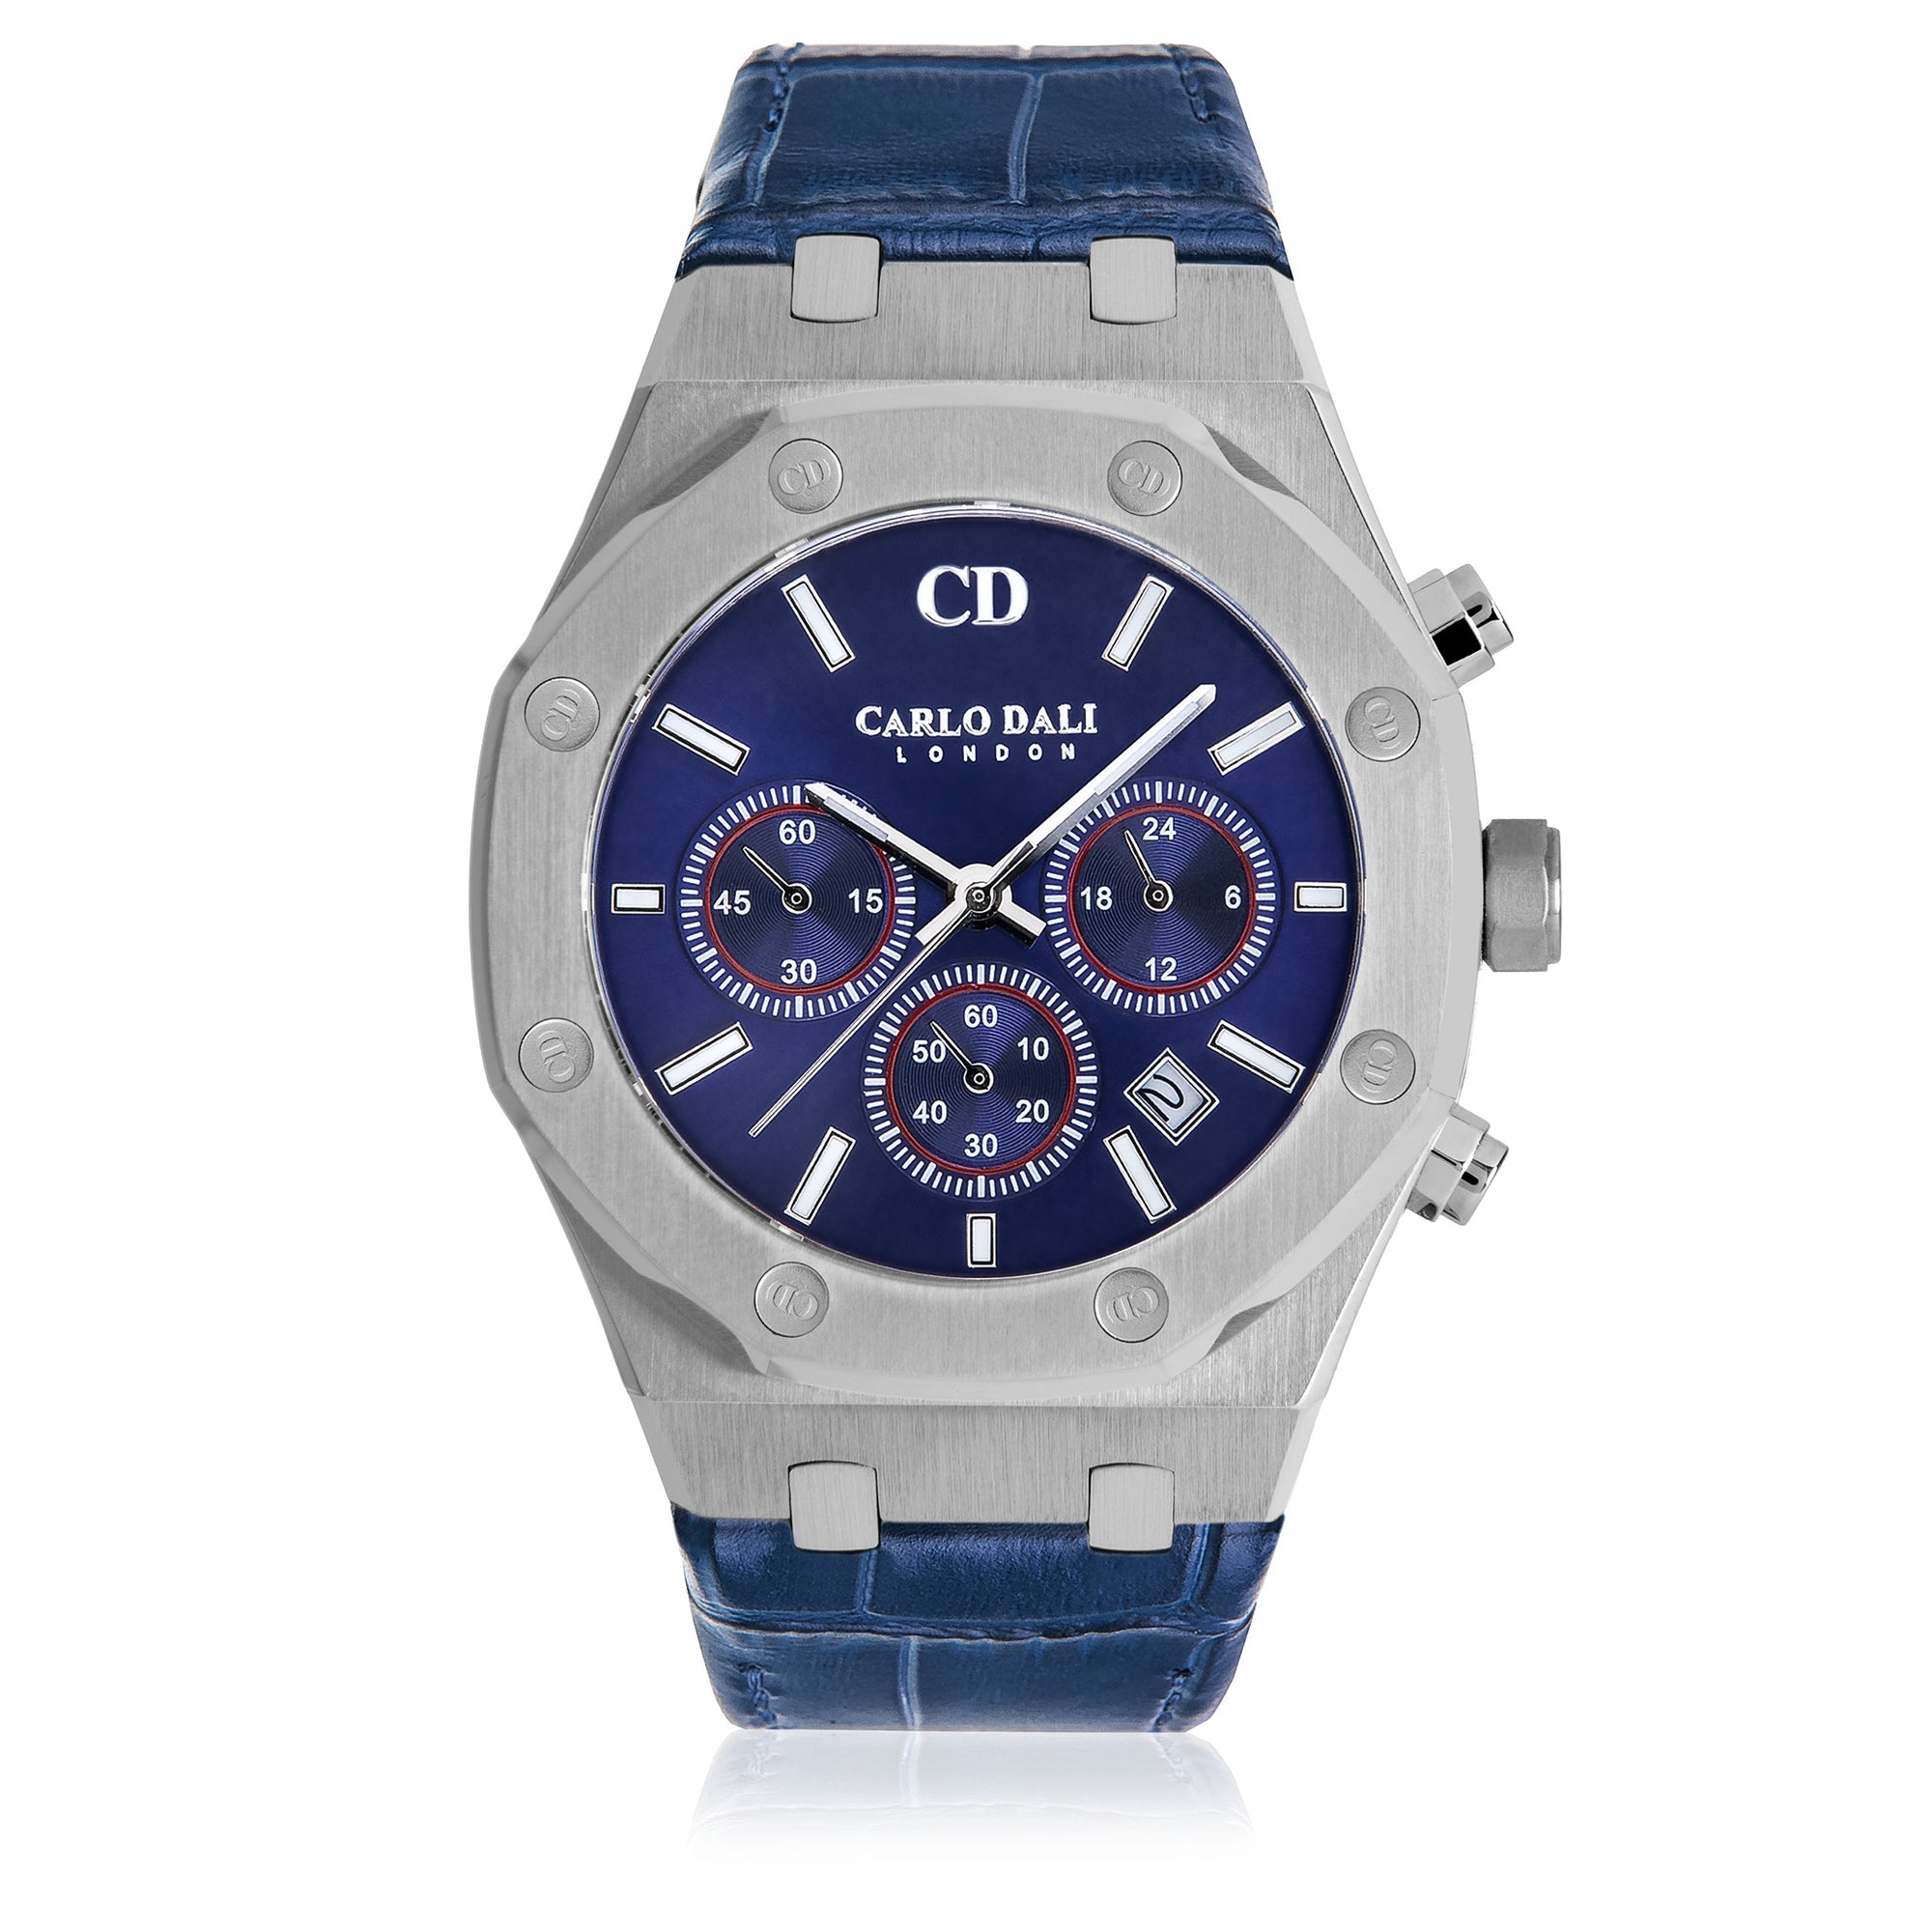 CARLO DALI Chronograph Leather Blue watch